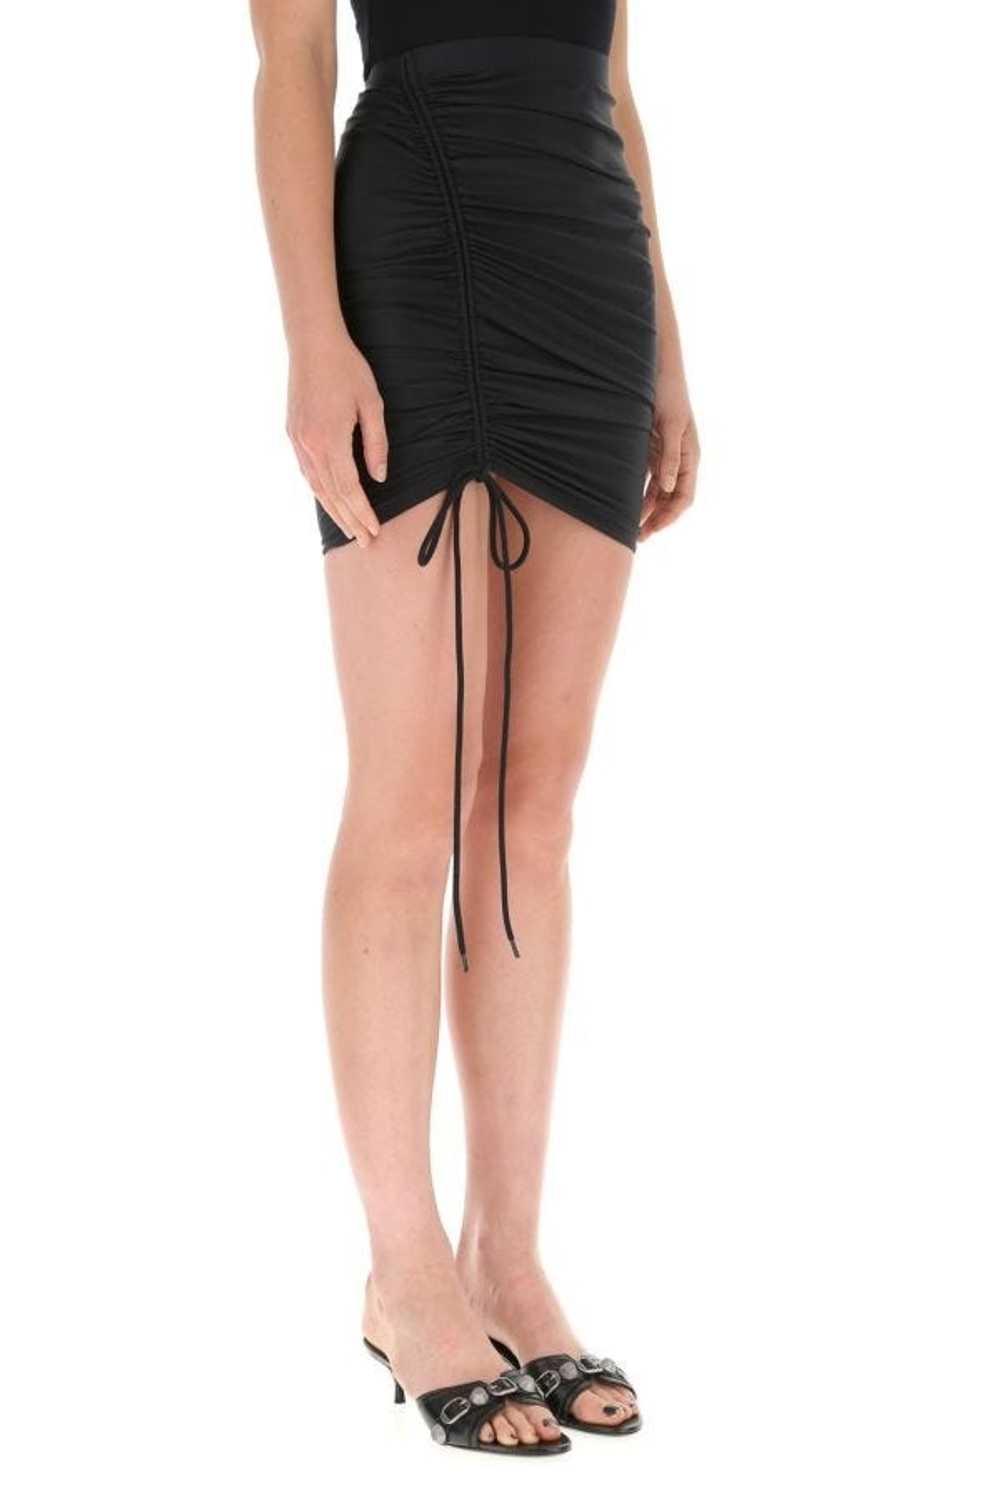 Balenciaga Woman Black Stretch Nylon Skirt - image 3